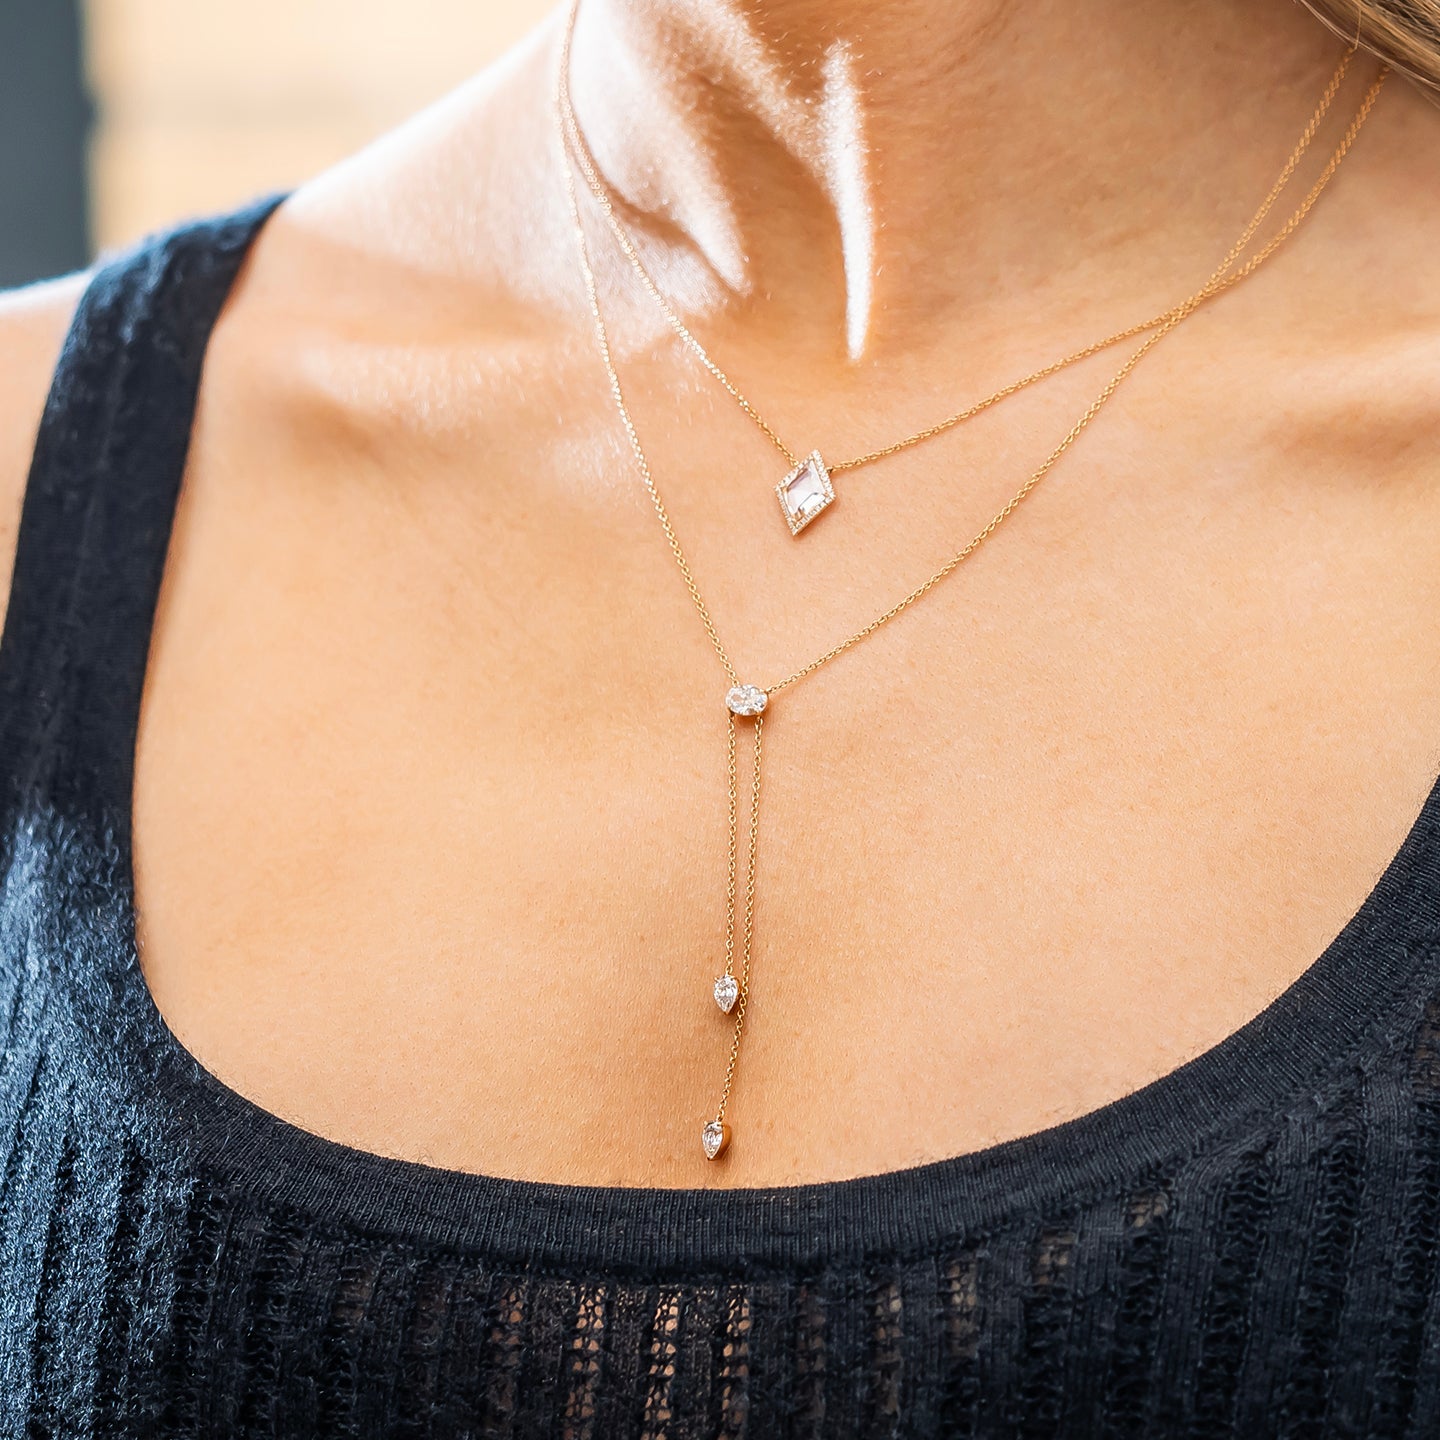 Eva Fehren Pave Prism Diamond Pendant Necklace